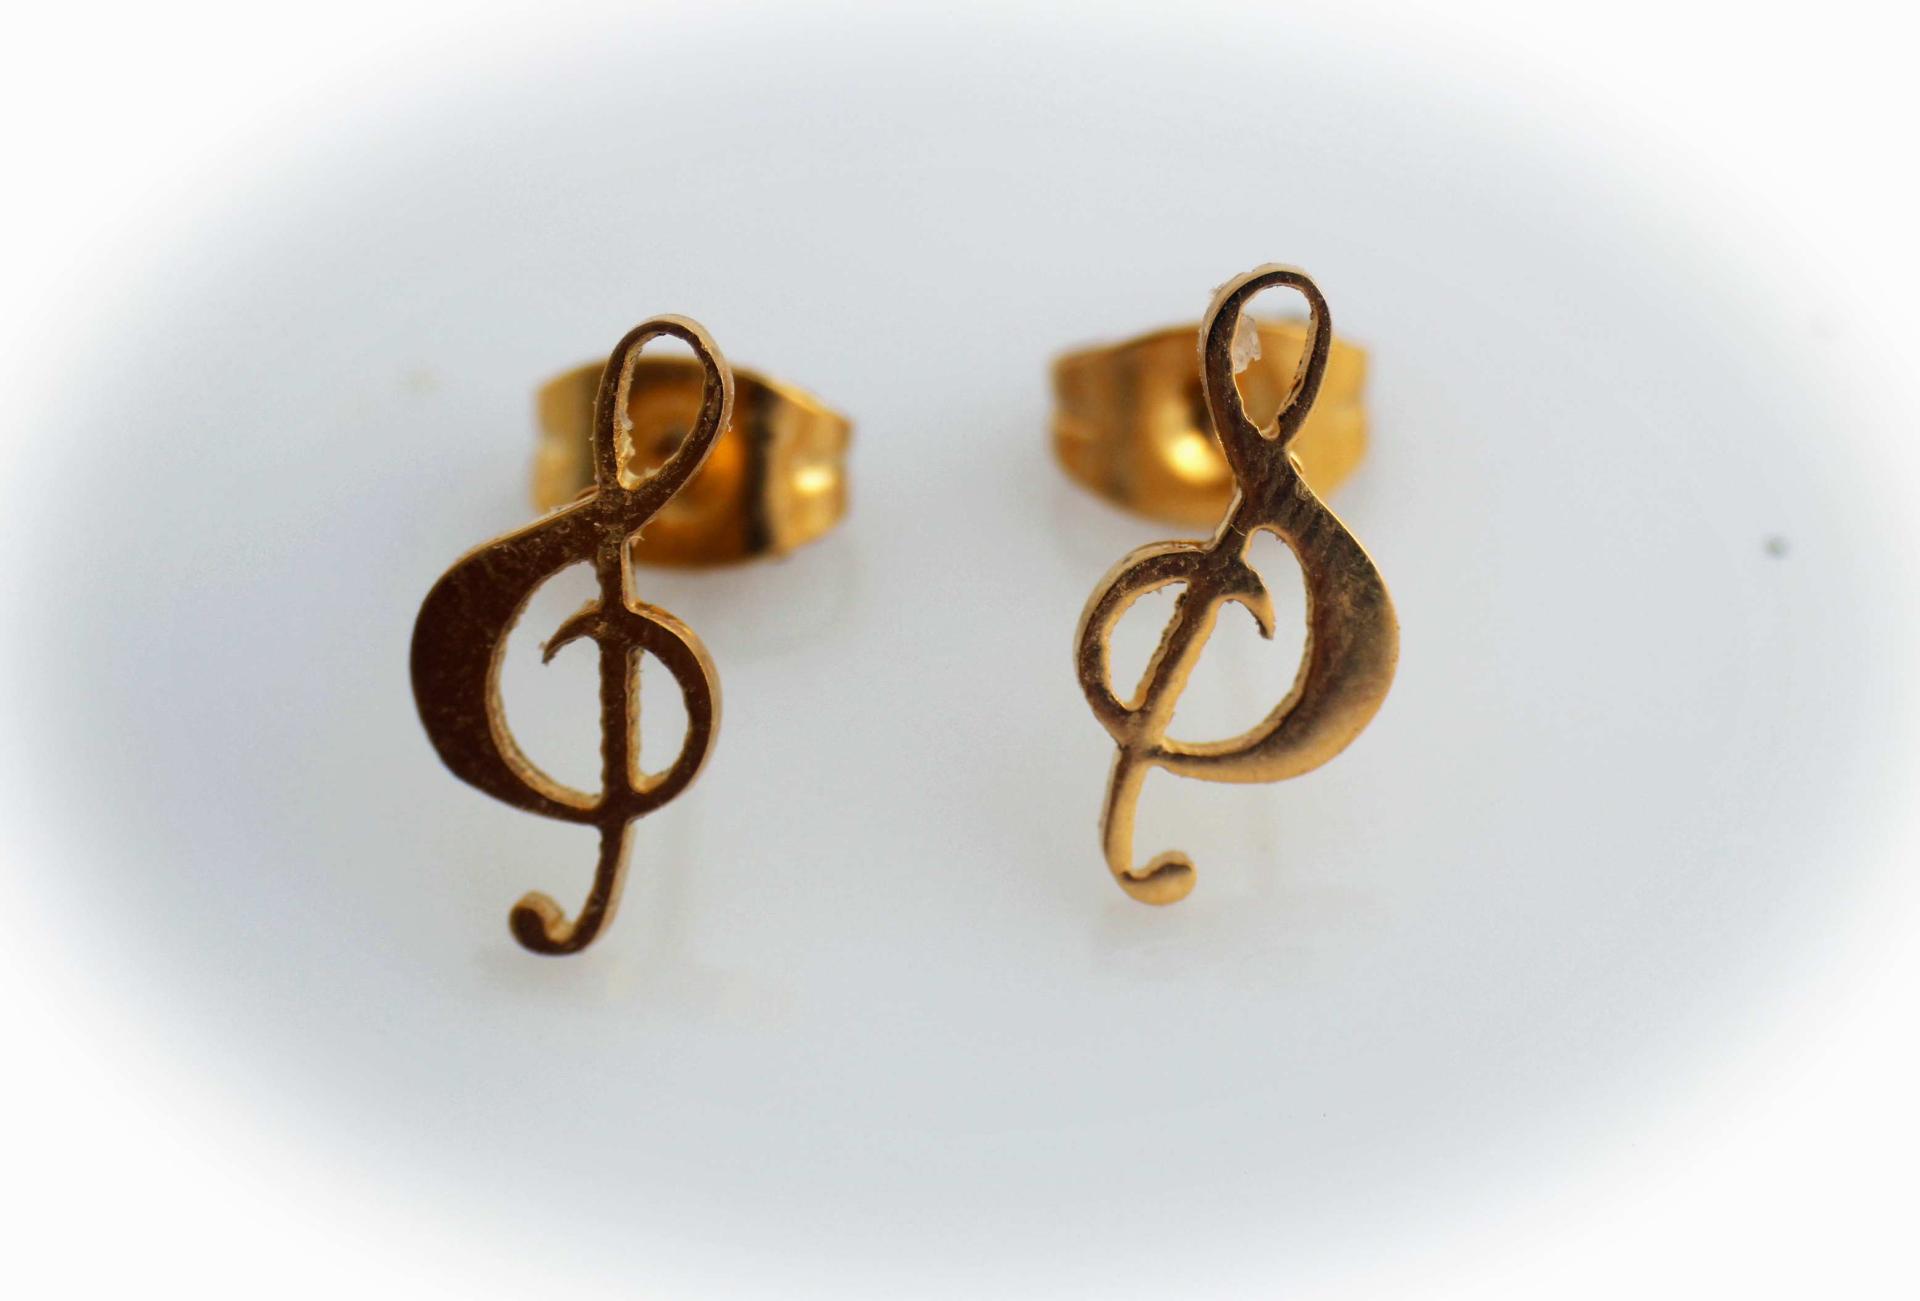 Gold treble clef note stud earrings